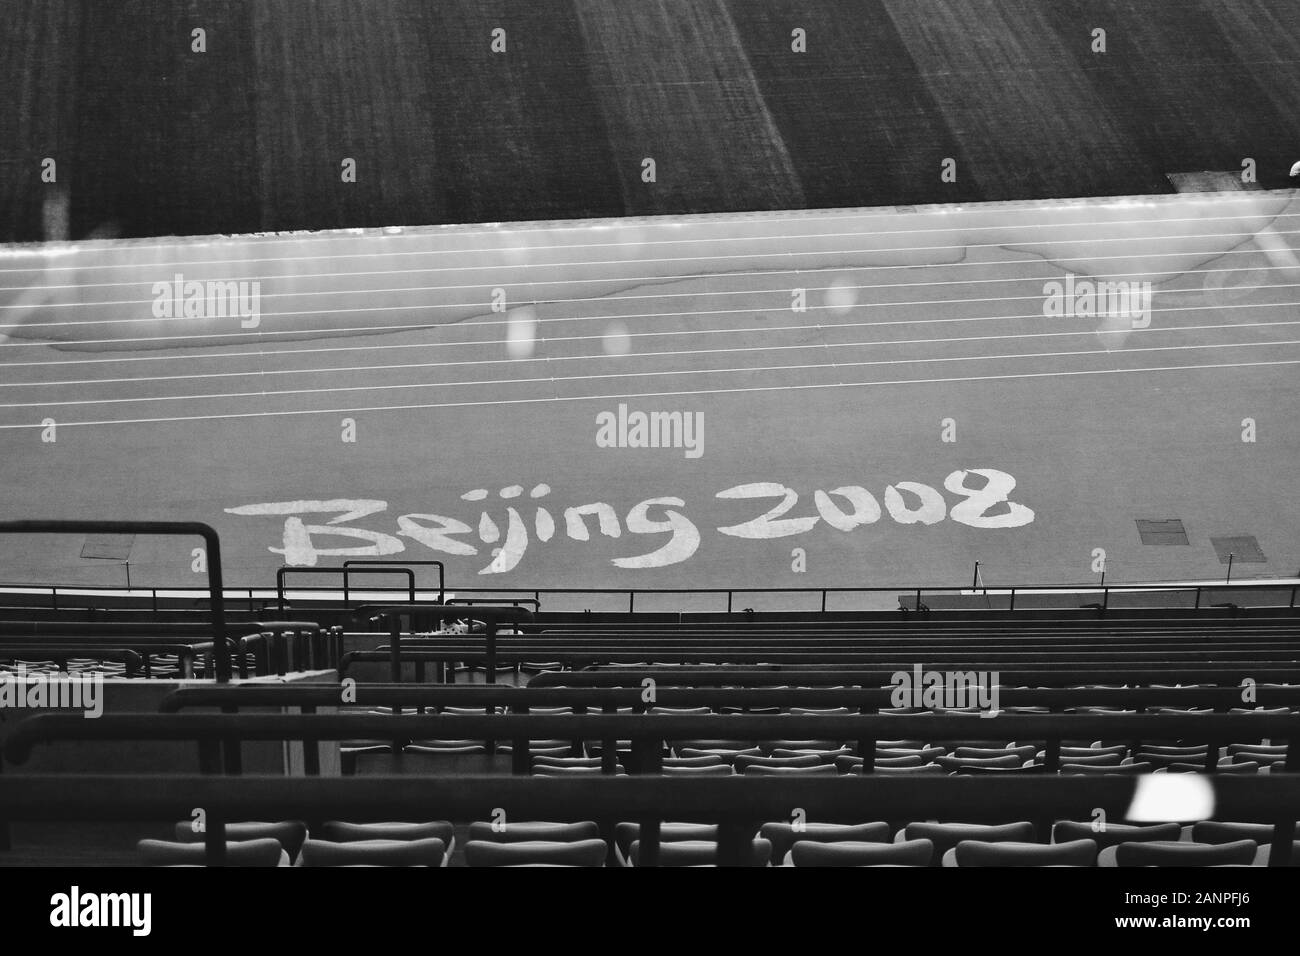 Legend of 'Beijing 2008' olympics inside the Beijing National Stadium or Bird's Nest designed by architects Herzog & de Stock Photo